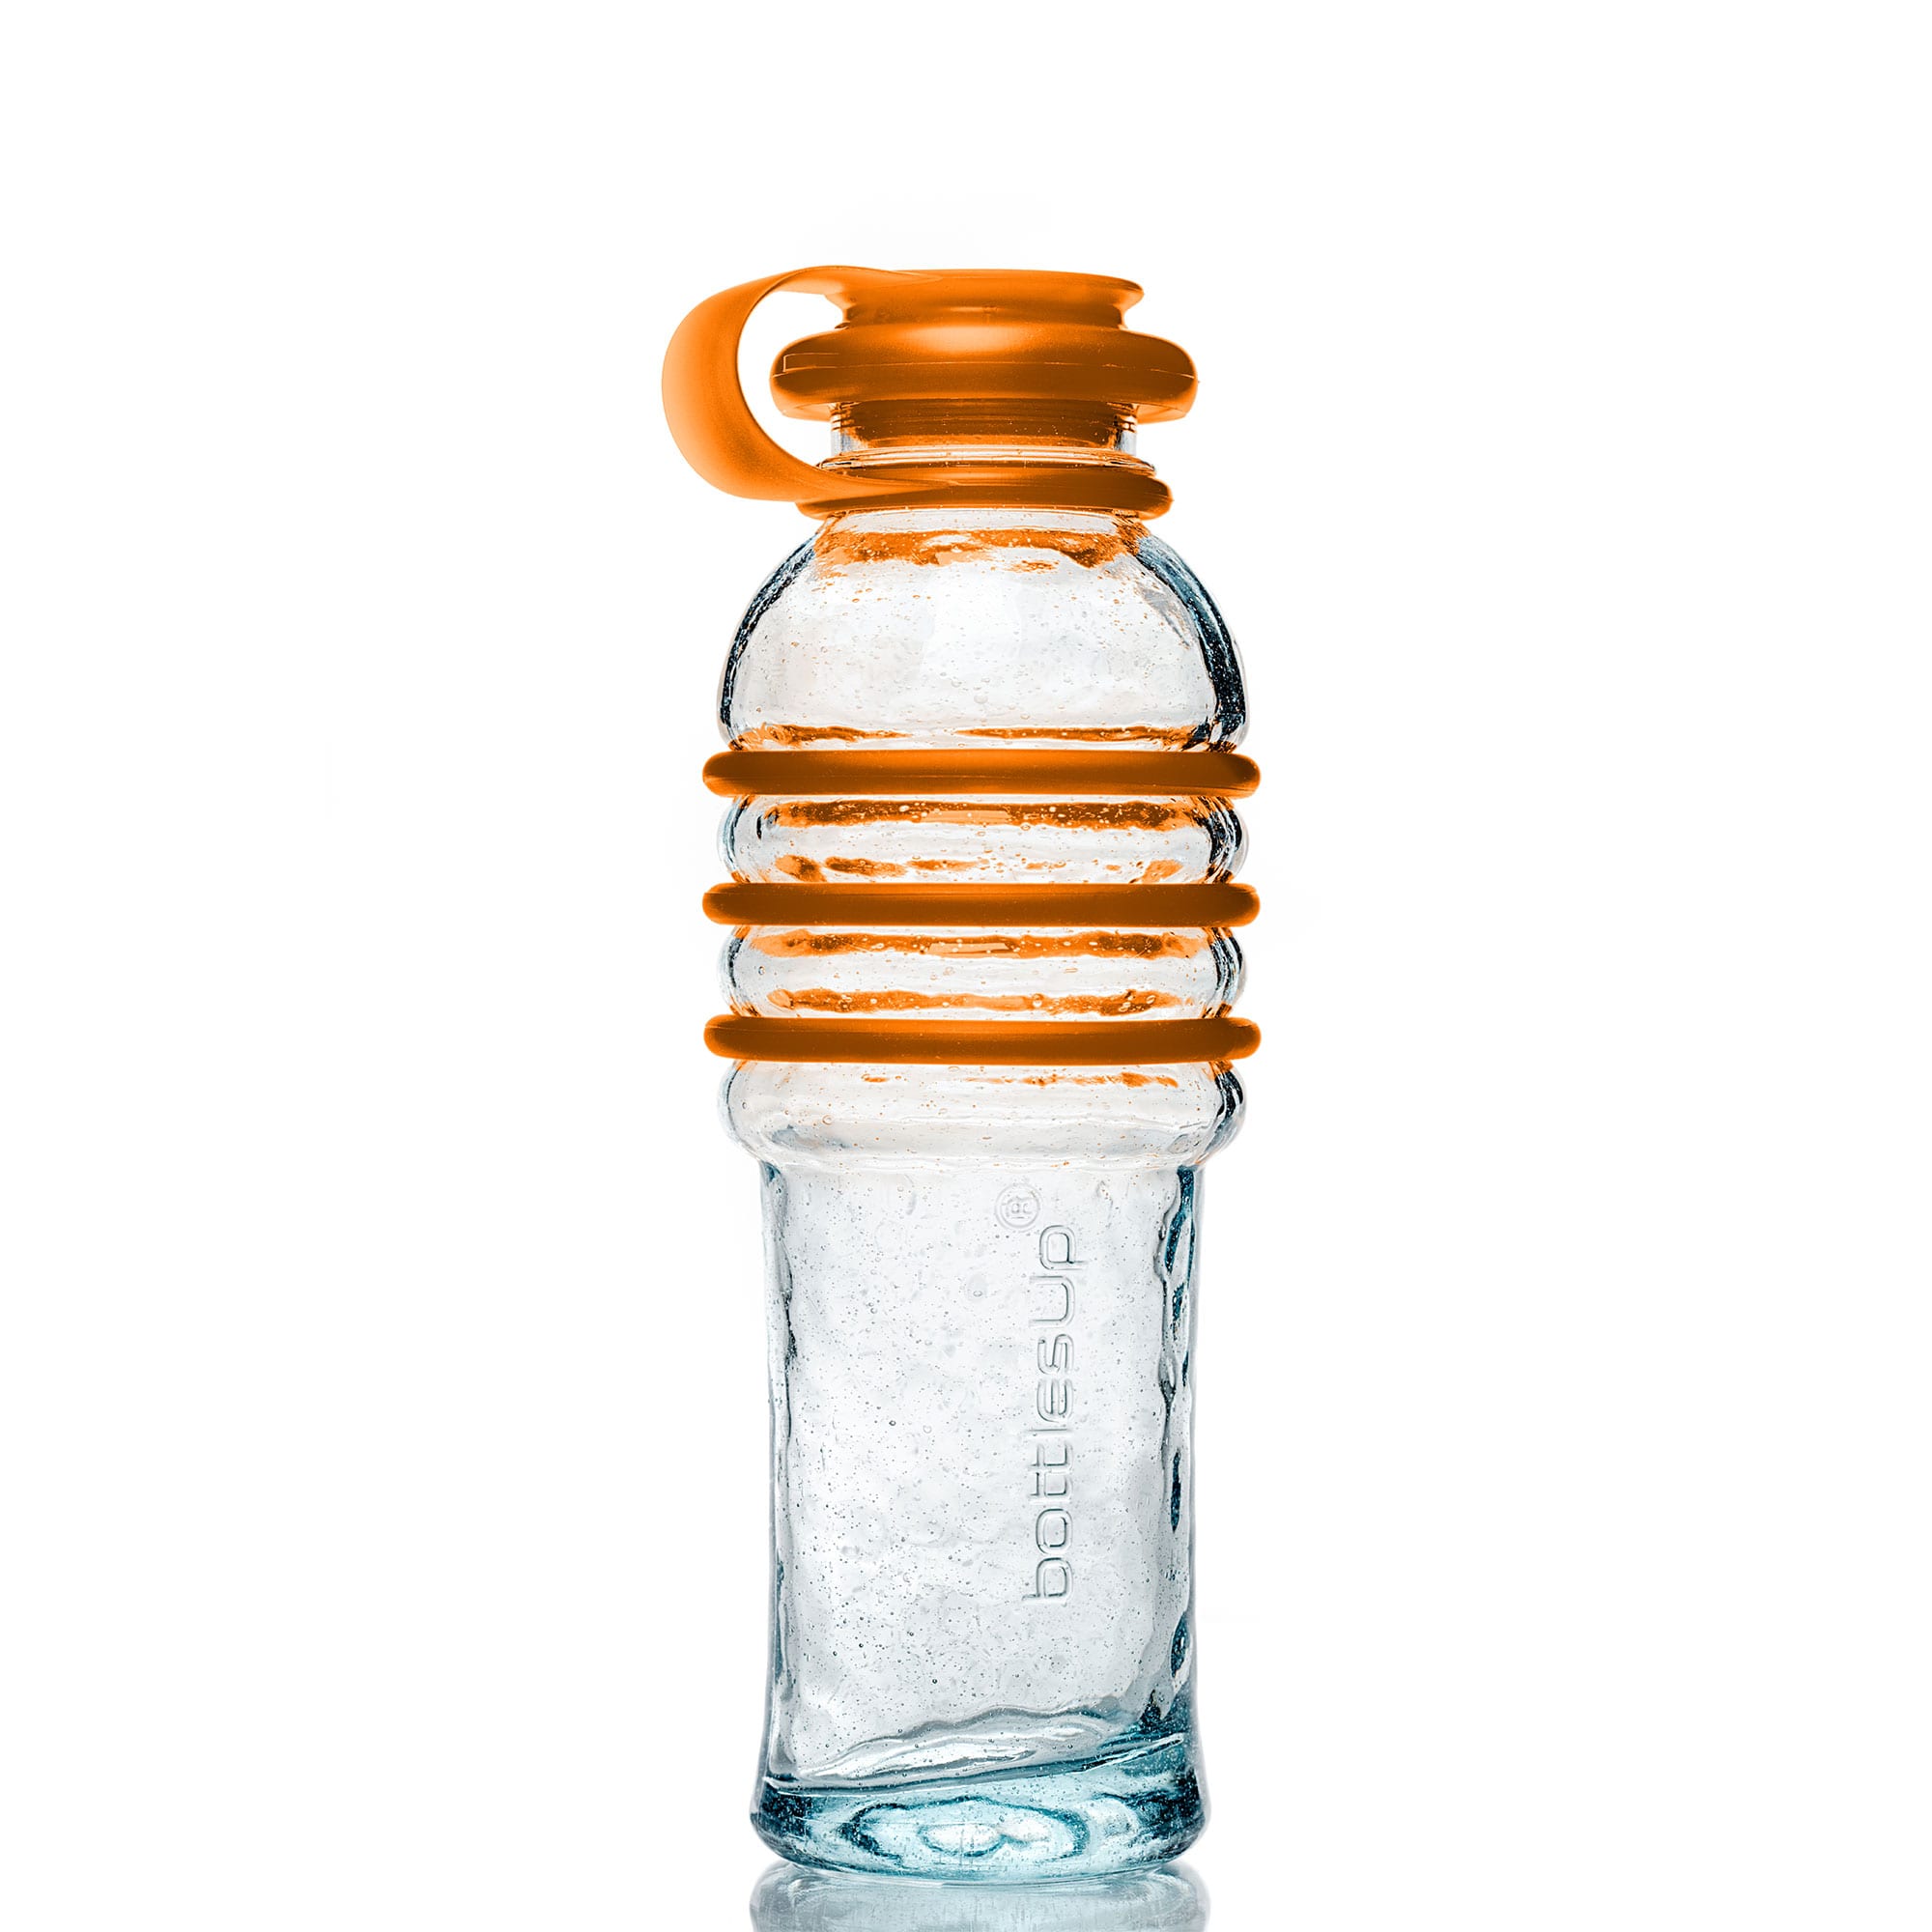 https://www.bottlesupglass.com/wp-content/uploads/2020/11/16oz-orange-cap.jpg